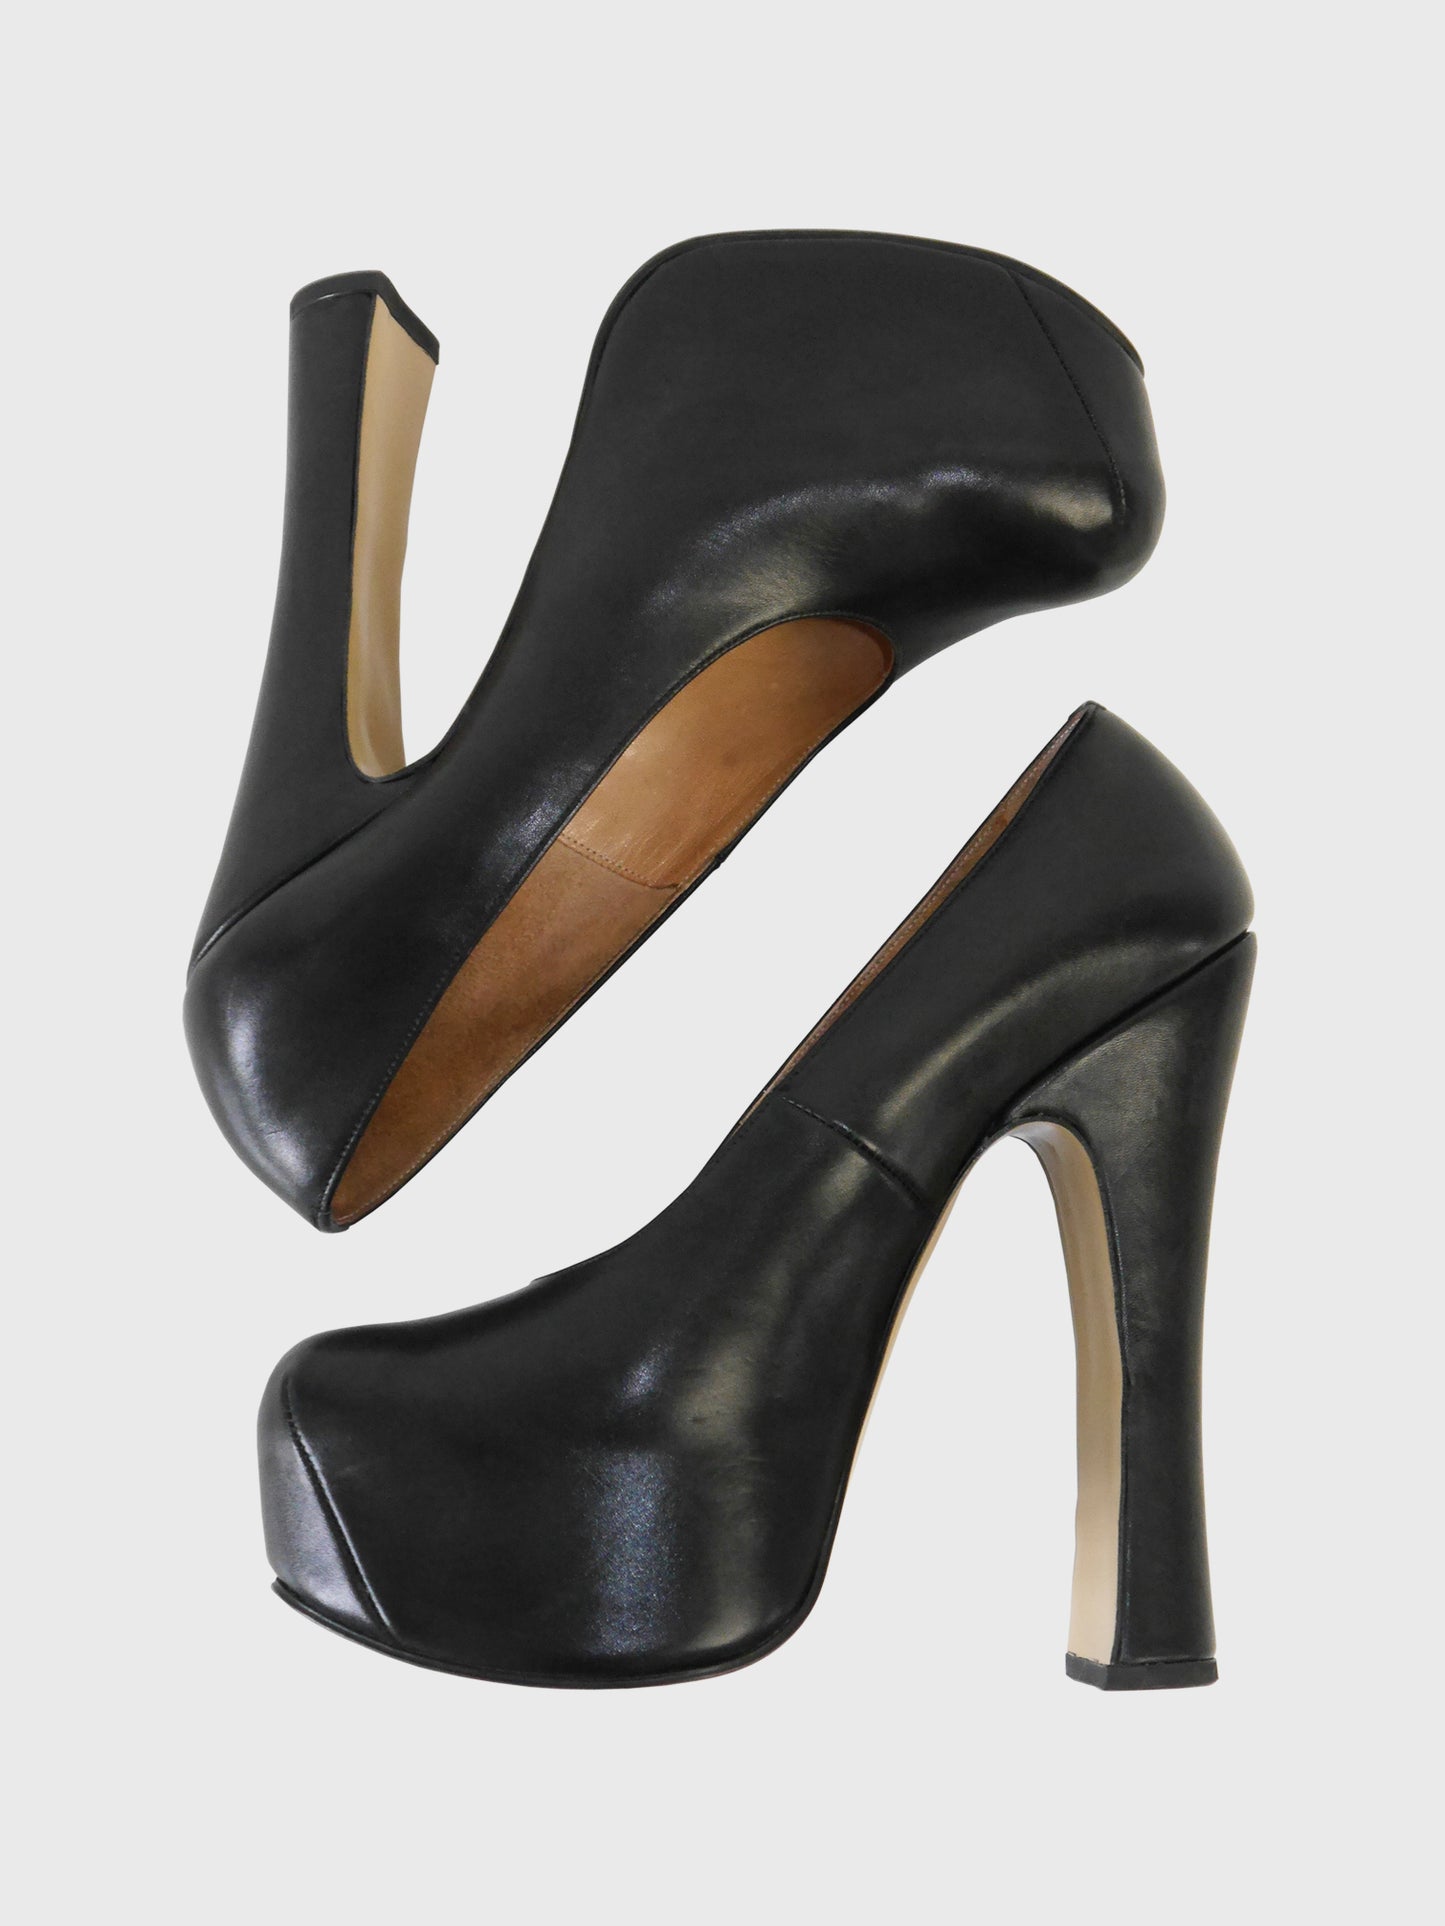 VIVIENNE WESTWOOD c. 1991-1993 Vintage Elevated Court Shoes Platform Heels